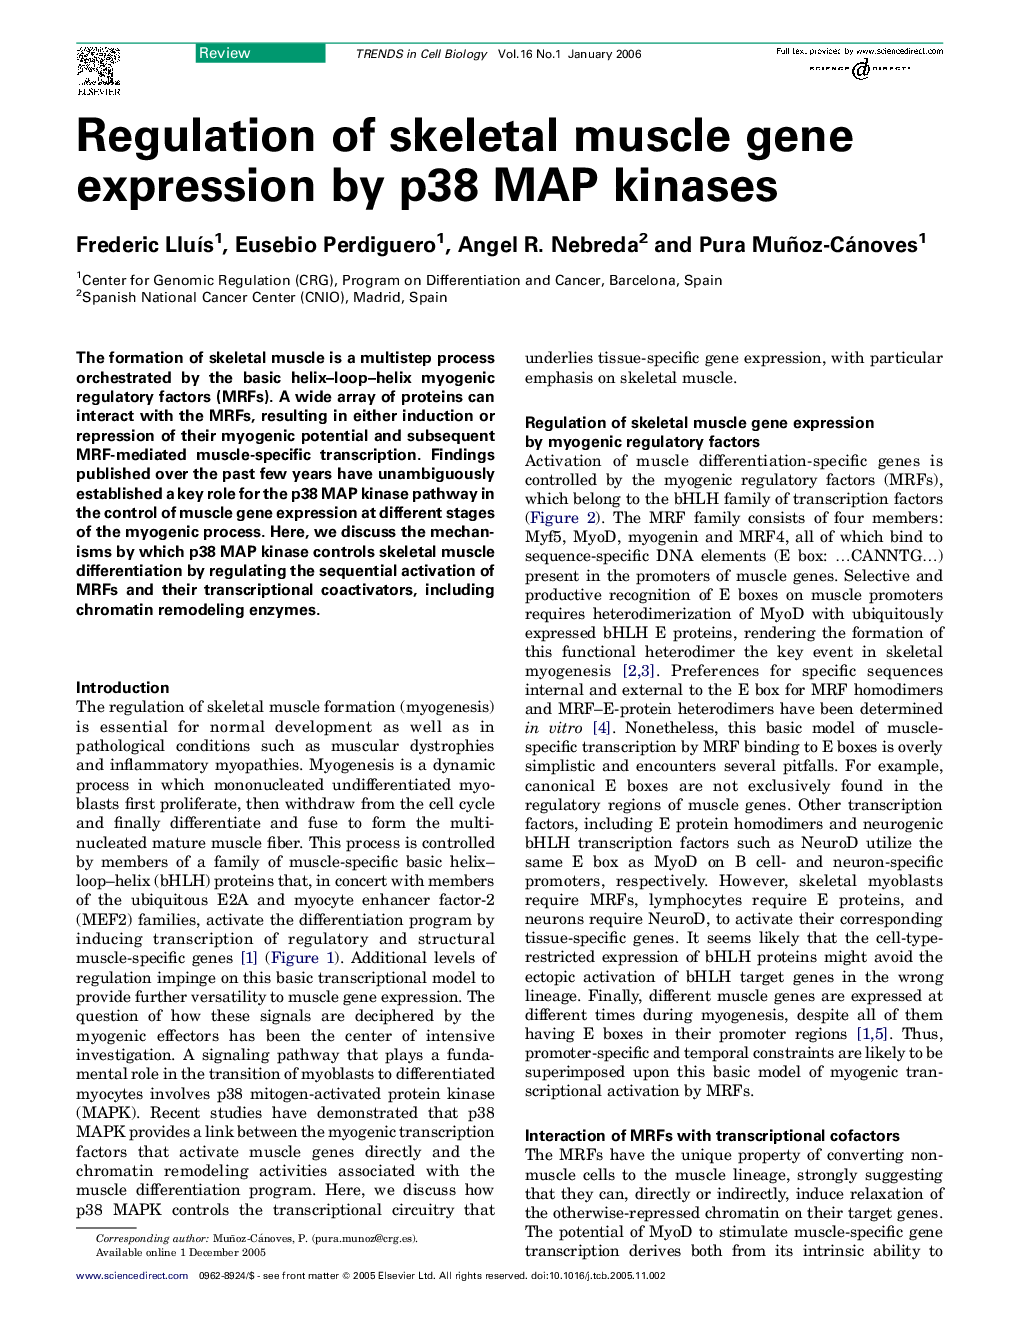 Regulation of skeletal muscle gene expression by p38 MAP kinases